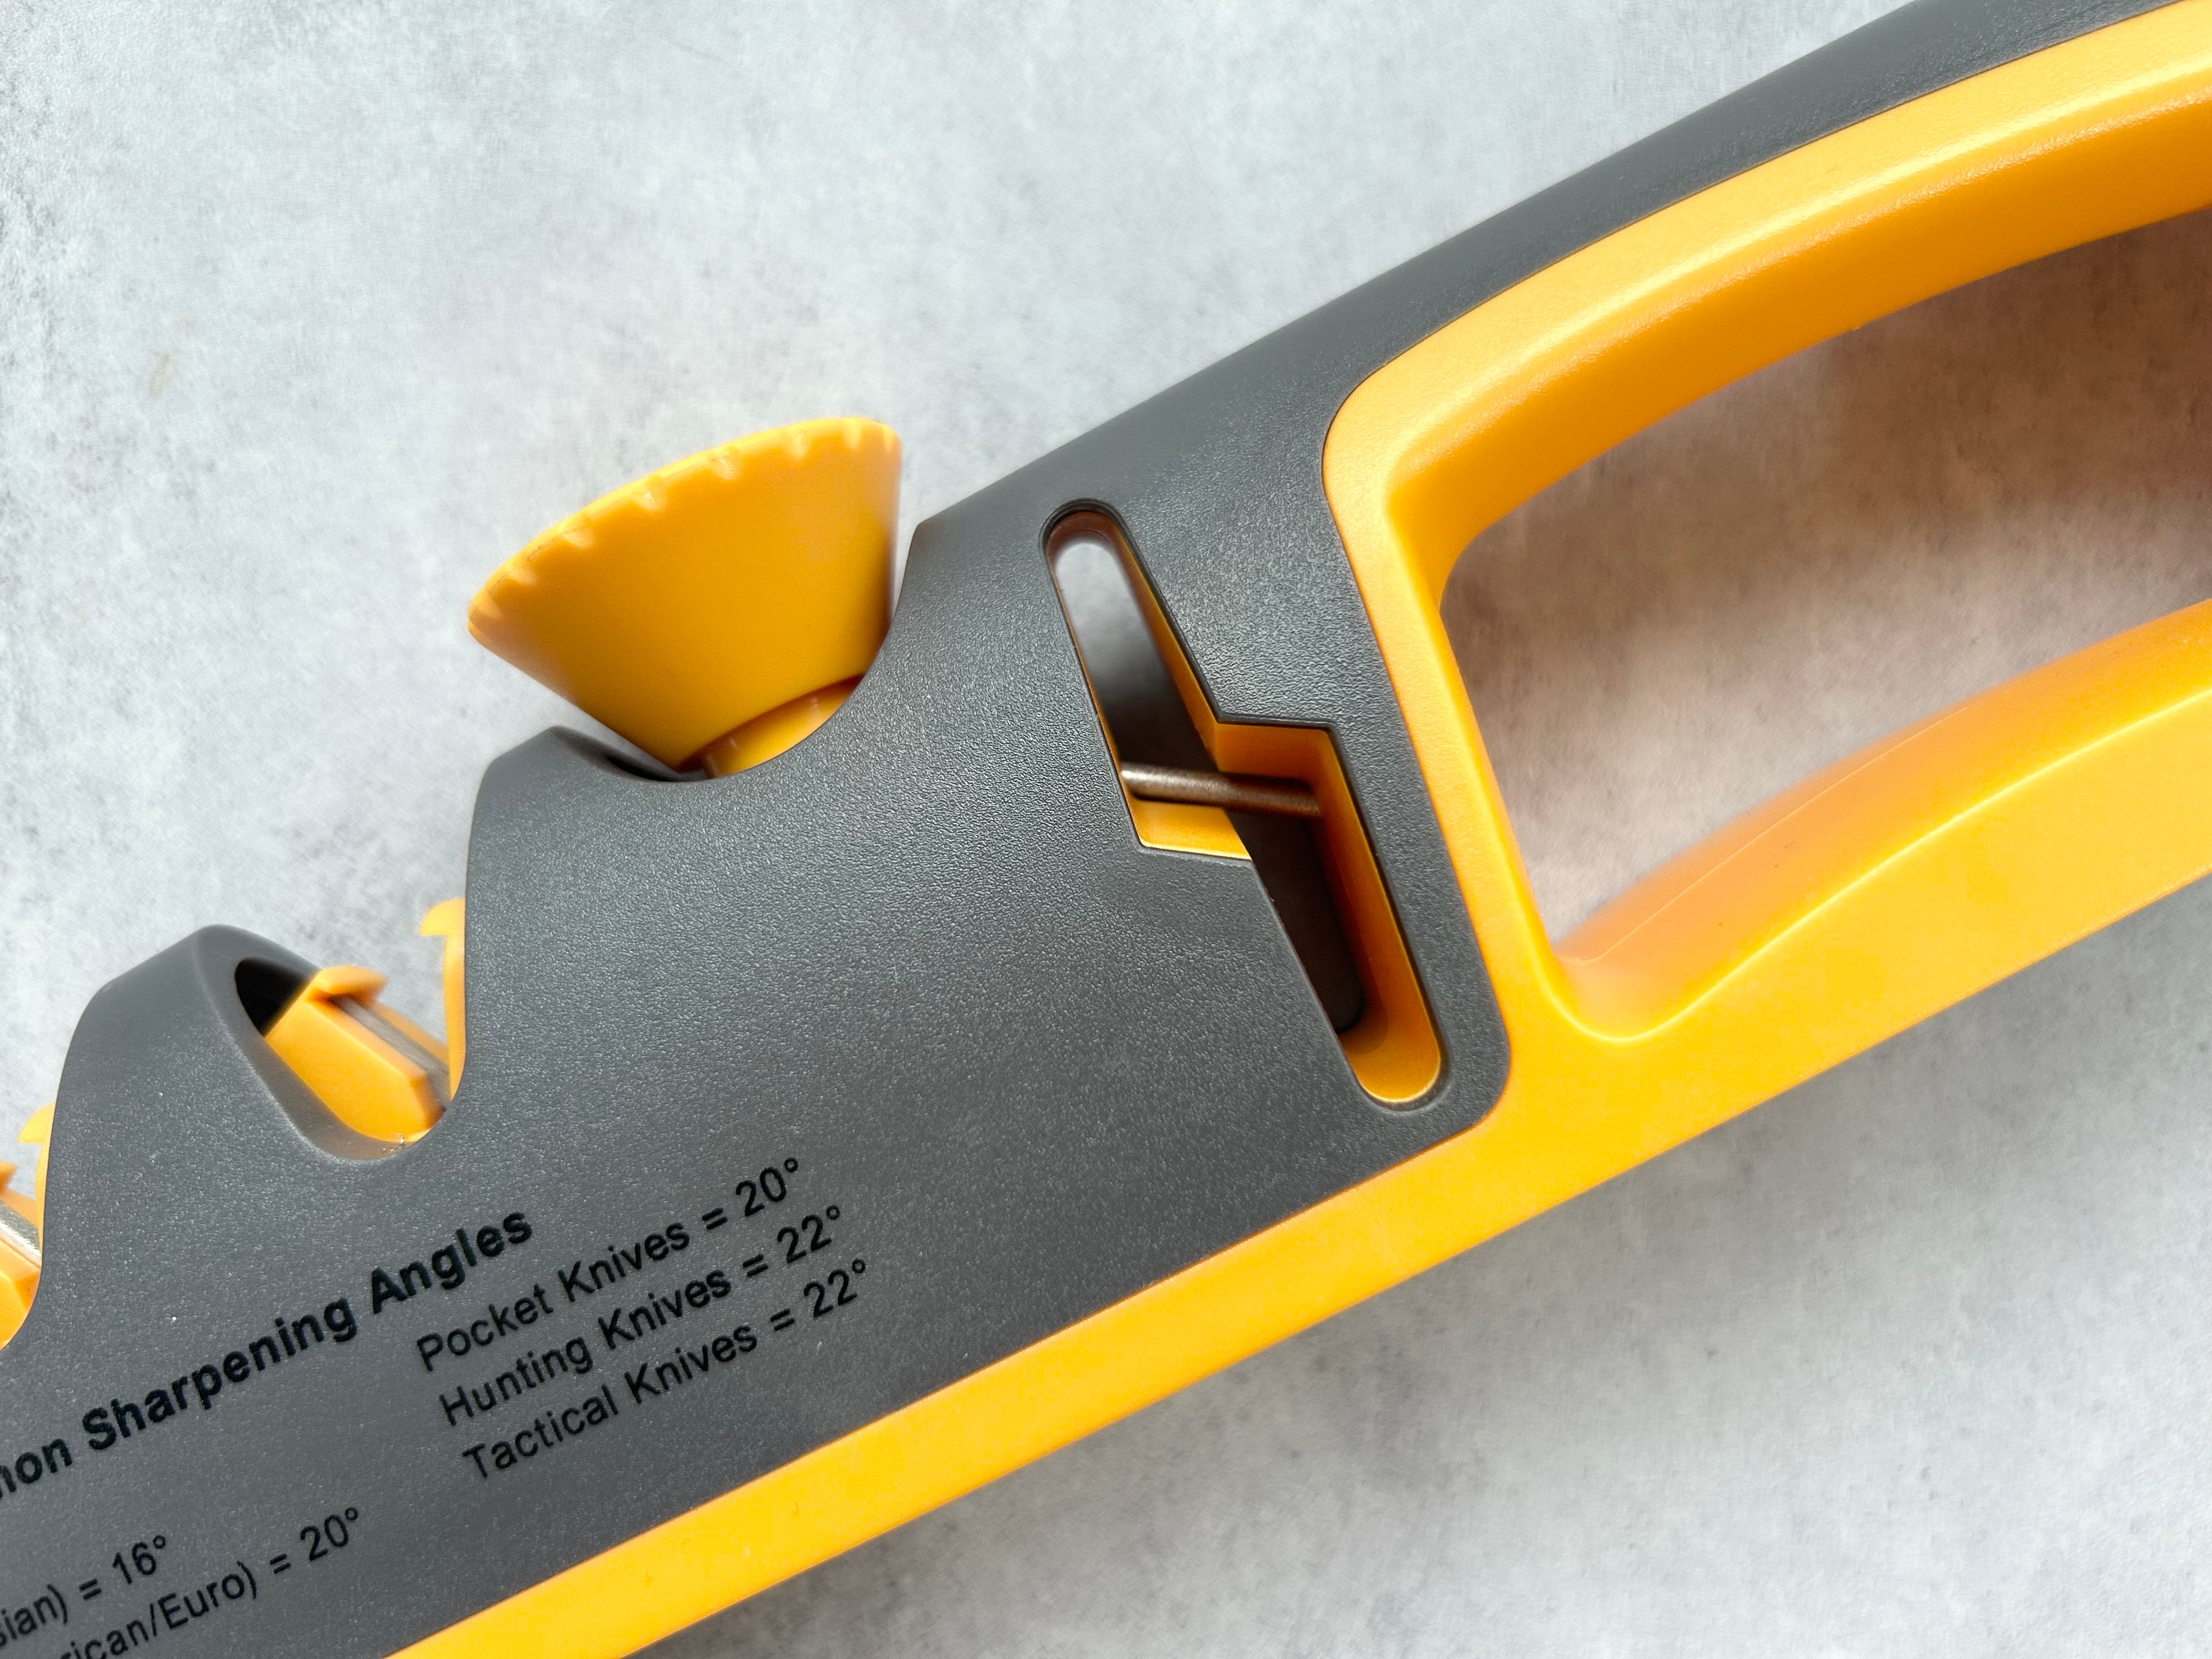 PRO EDGE+ Angle Adjustable Knife Sharpener, Designed by Raythesharpener